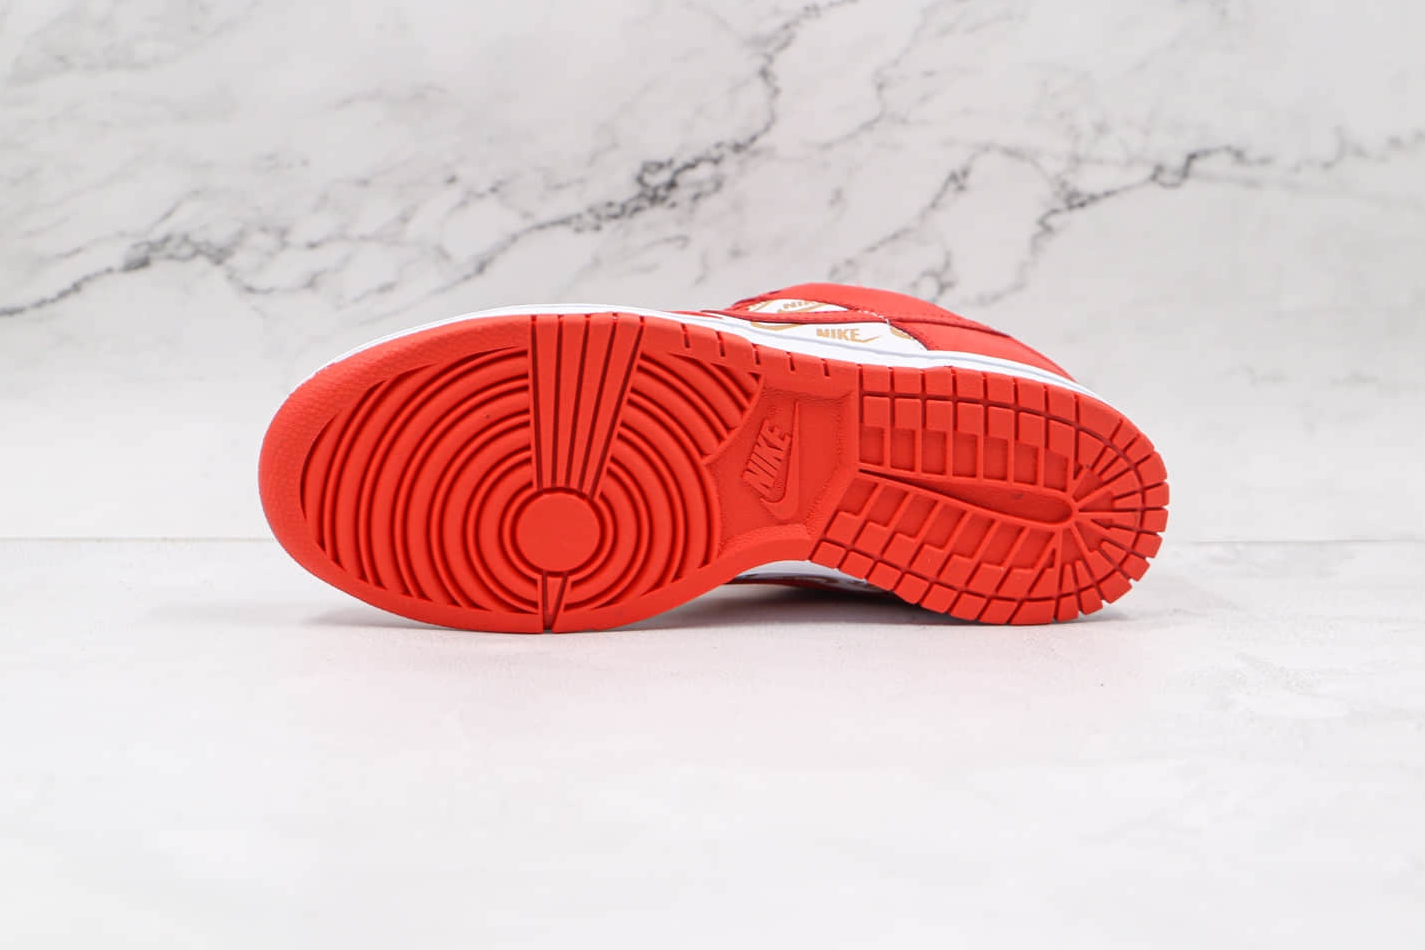 Supreme x Nike SB Dunk Low White Black Orange DH3228-161: Limited Edition Streetwear Collaboration